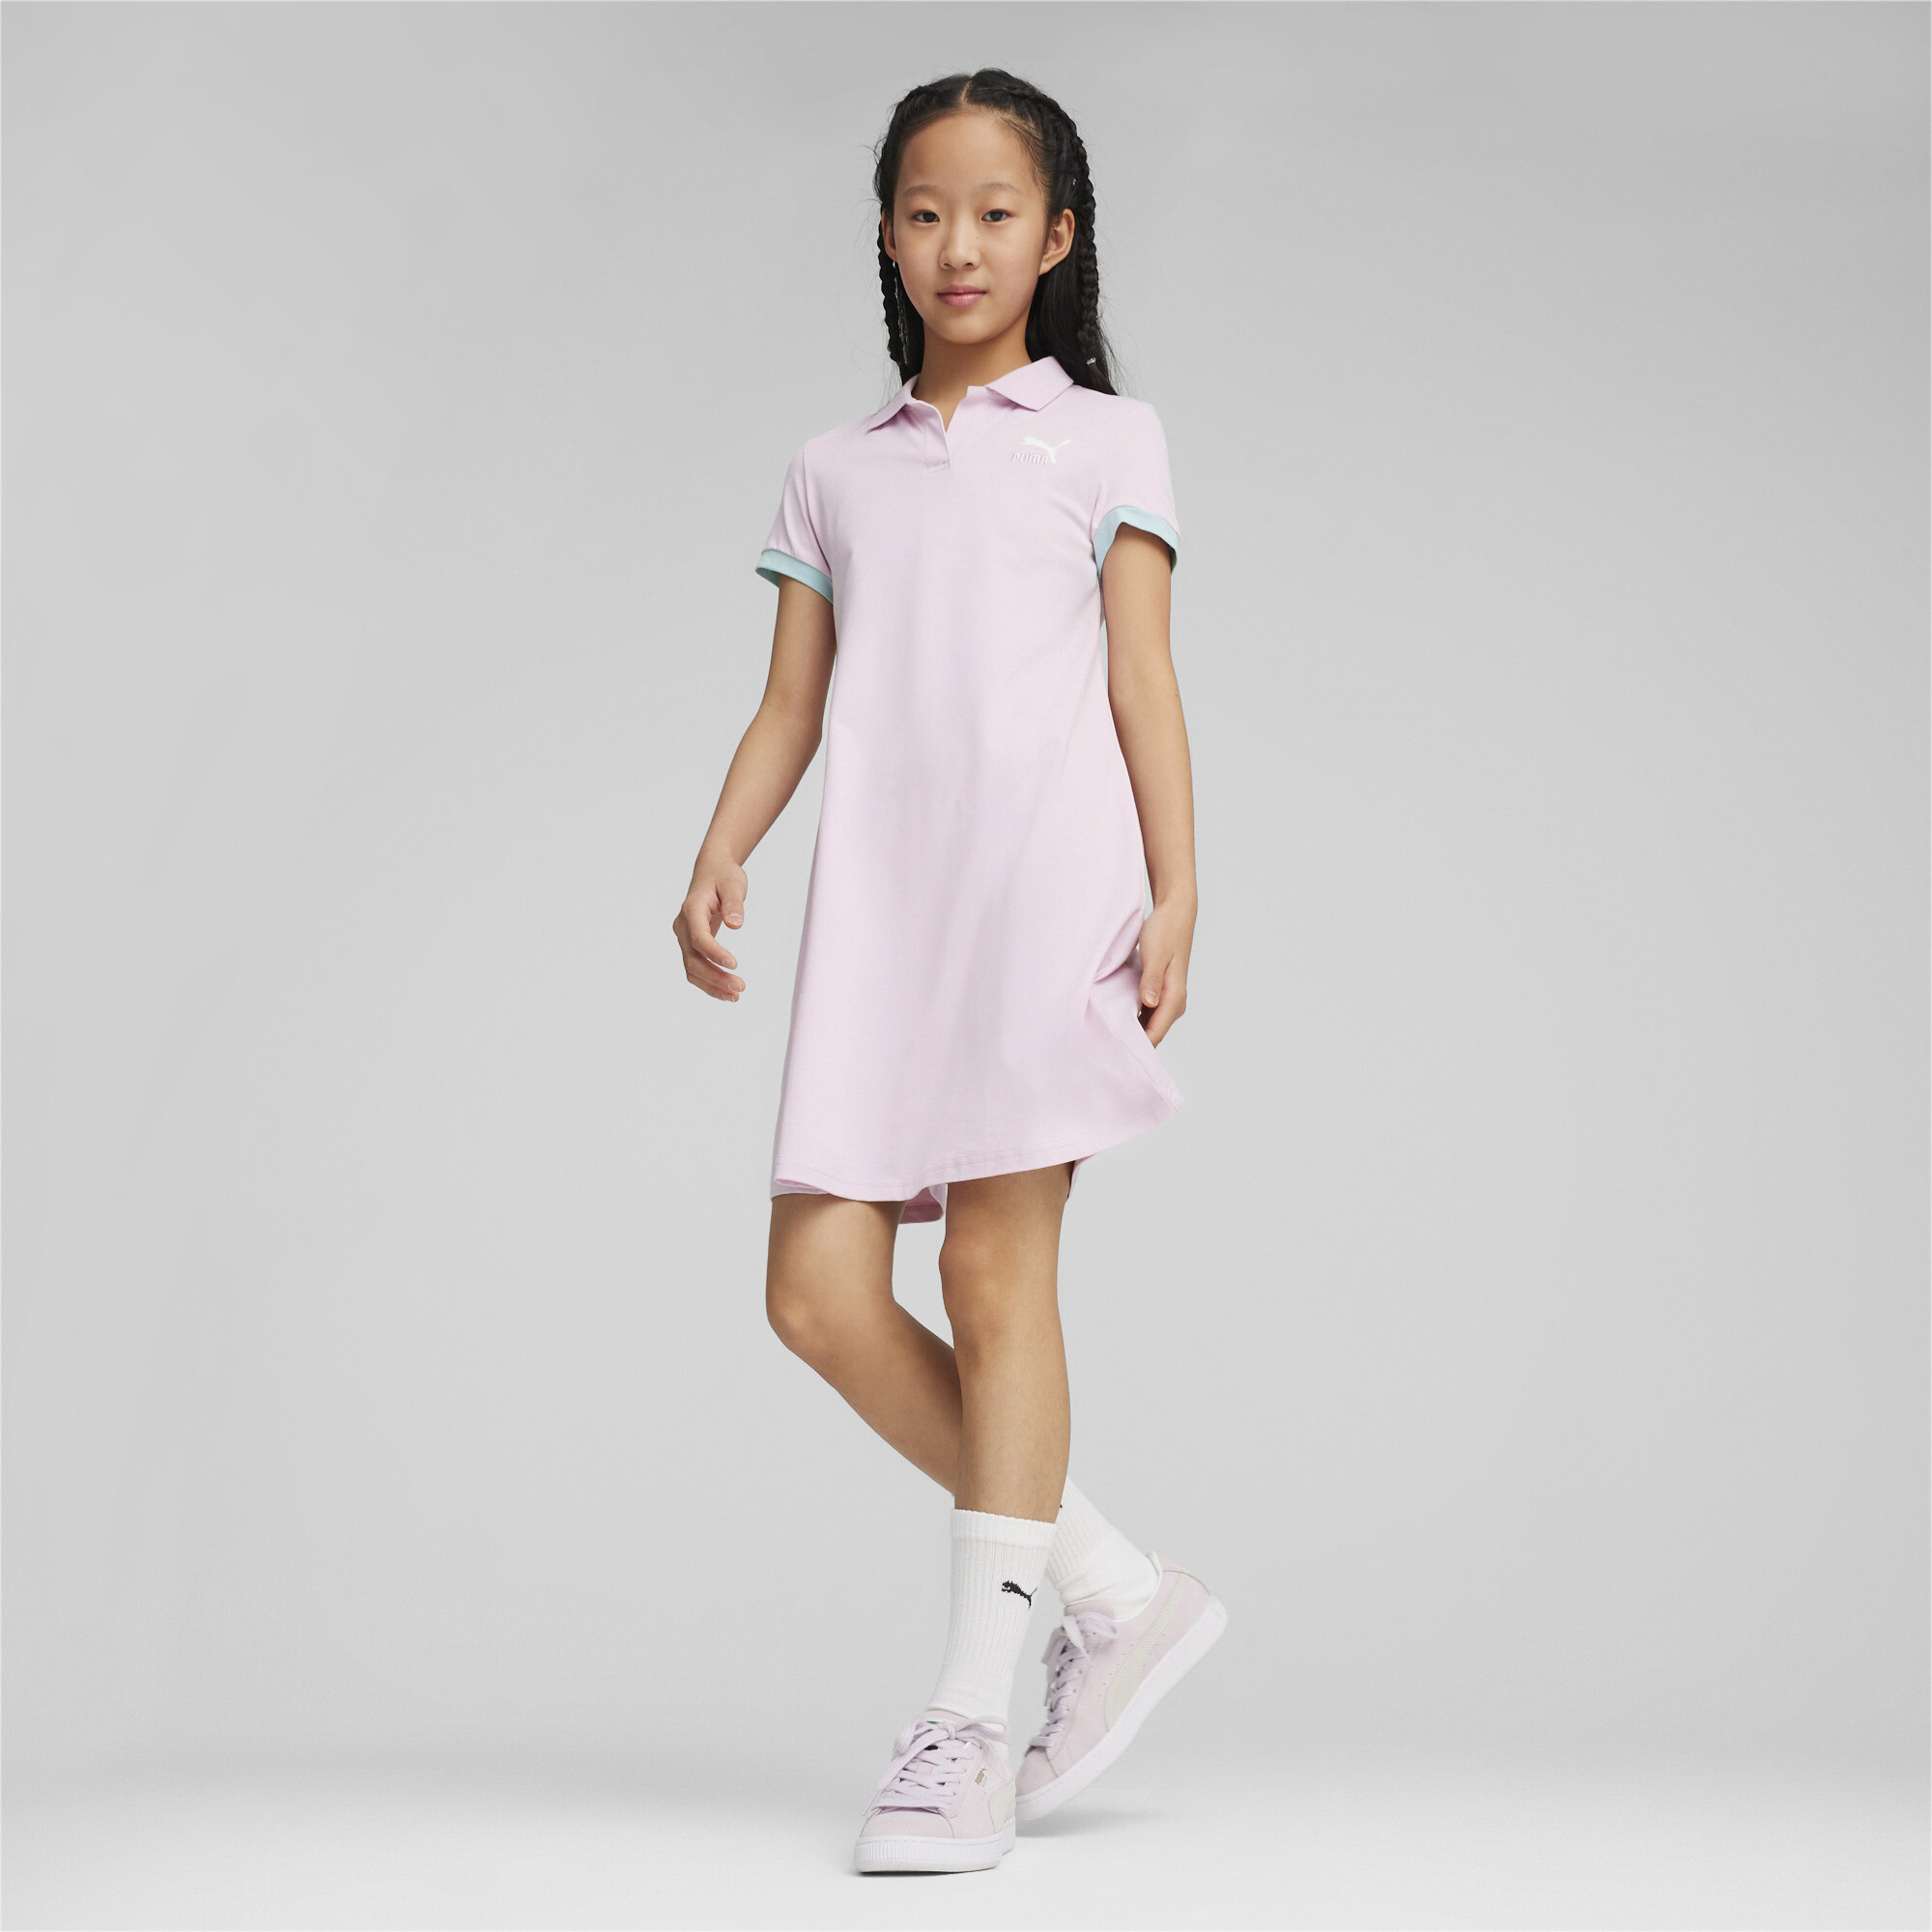 PUMA CLASSICS Match Point Dress In Purple, Size 13-14 Youth